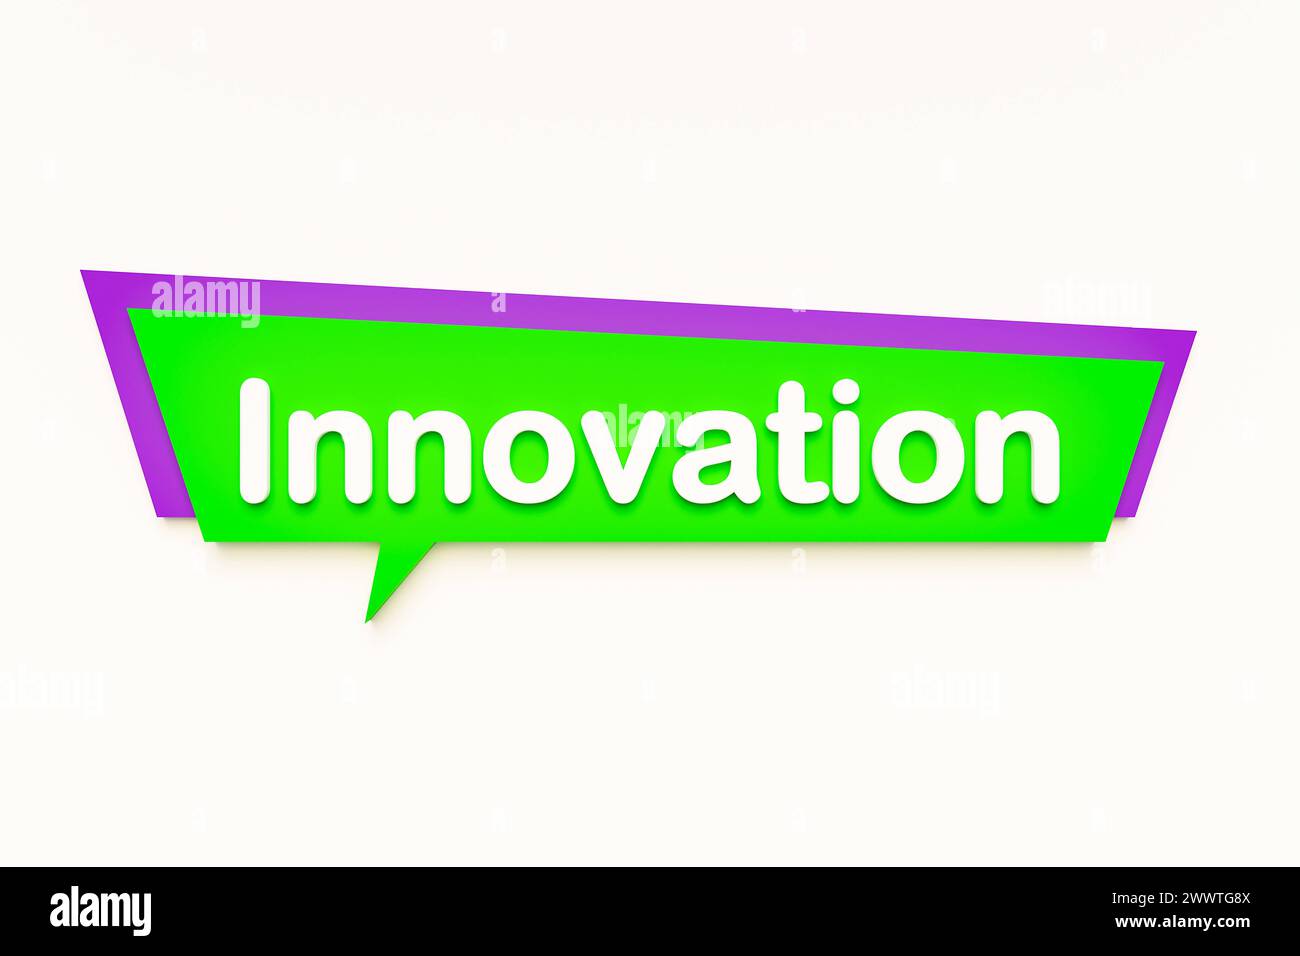 Innovation Innovation, colored cartoon speech bubble, white text. Progress, development, science, ideas. 3D illustration text bubble J010 innovation Stock Photo